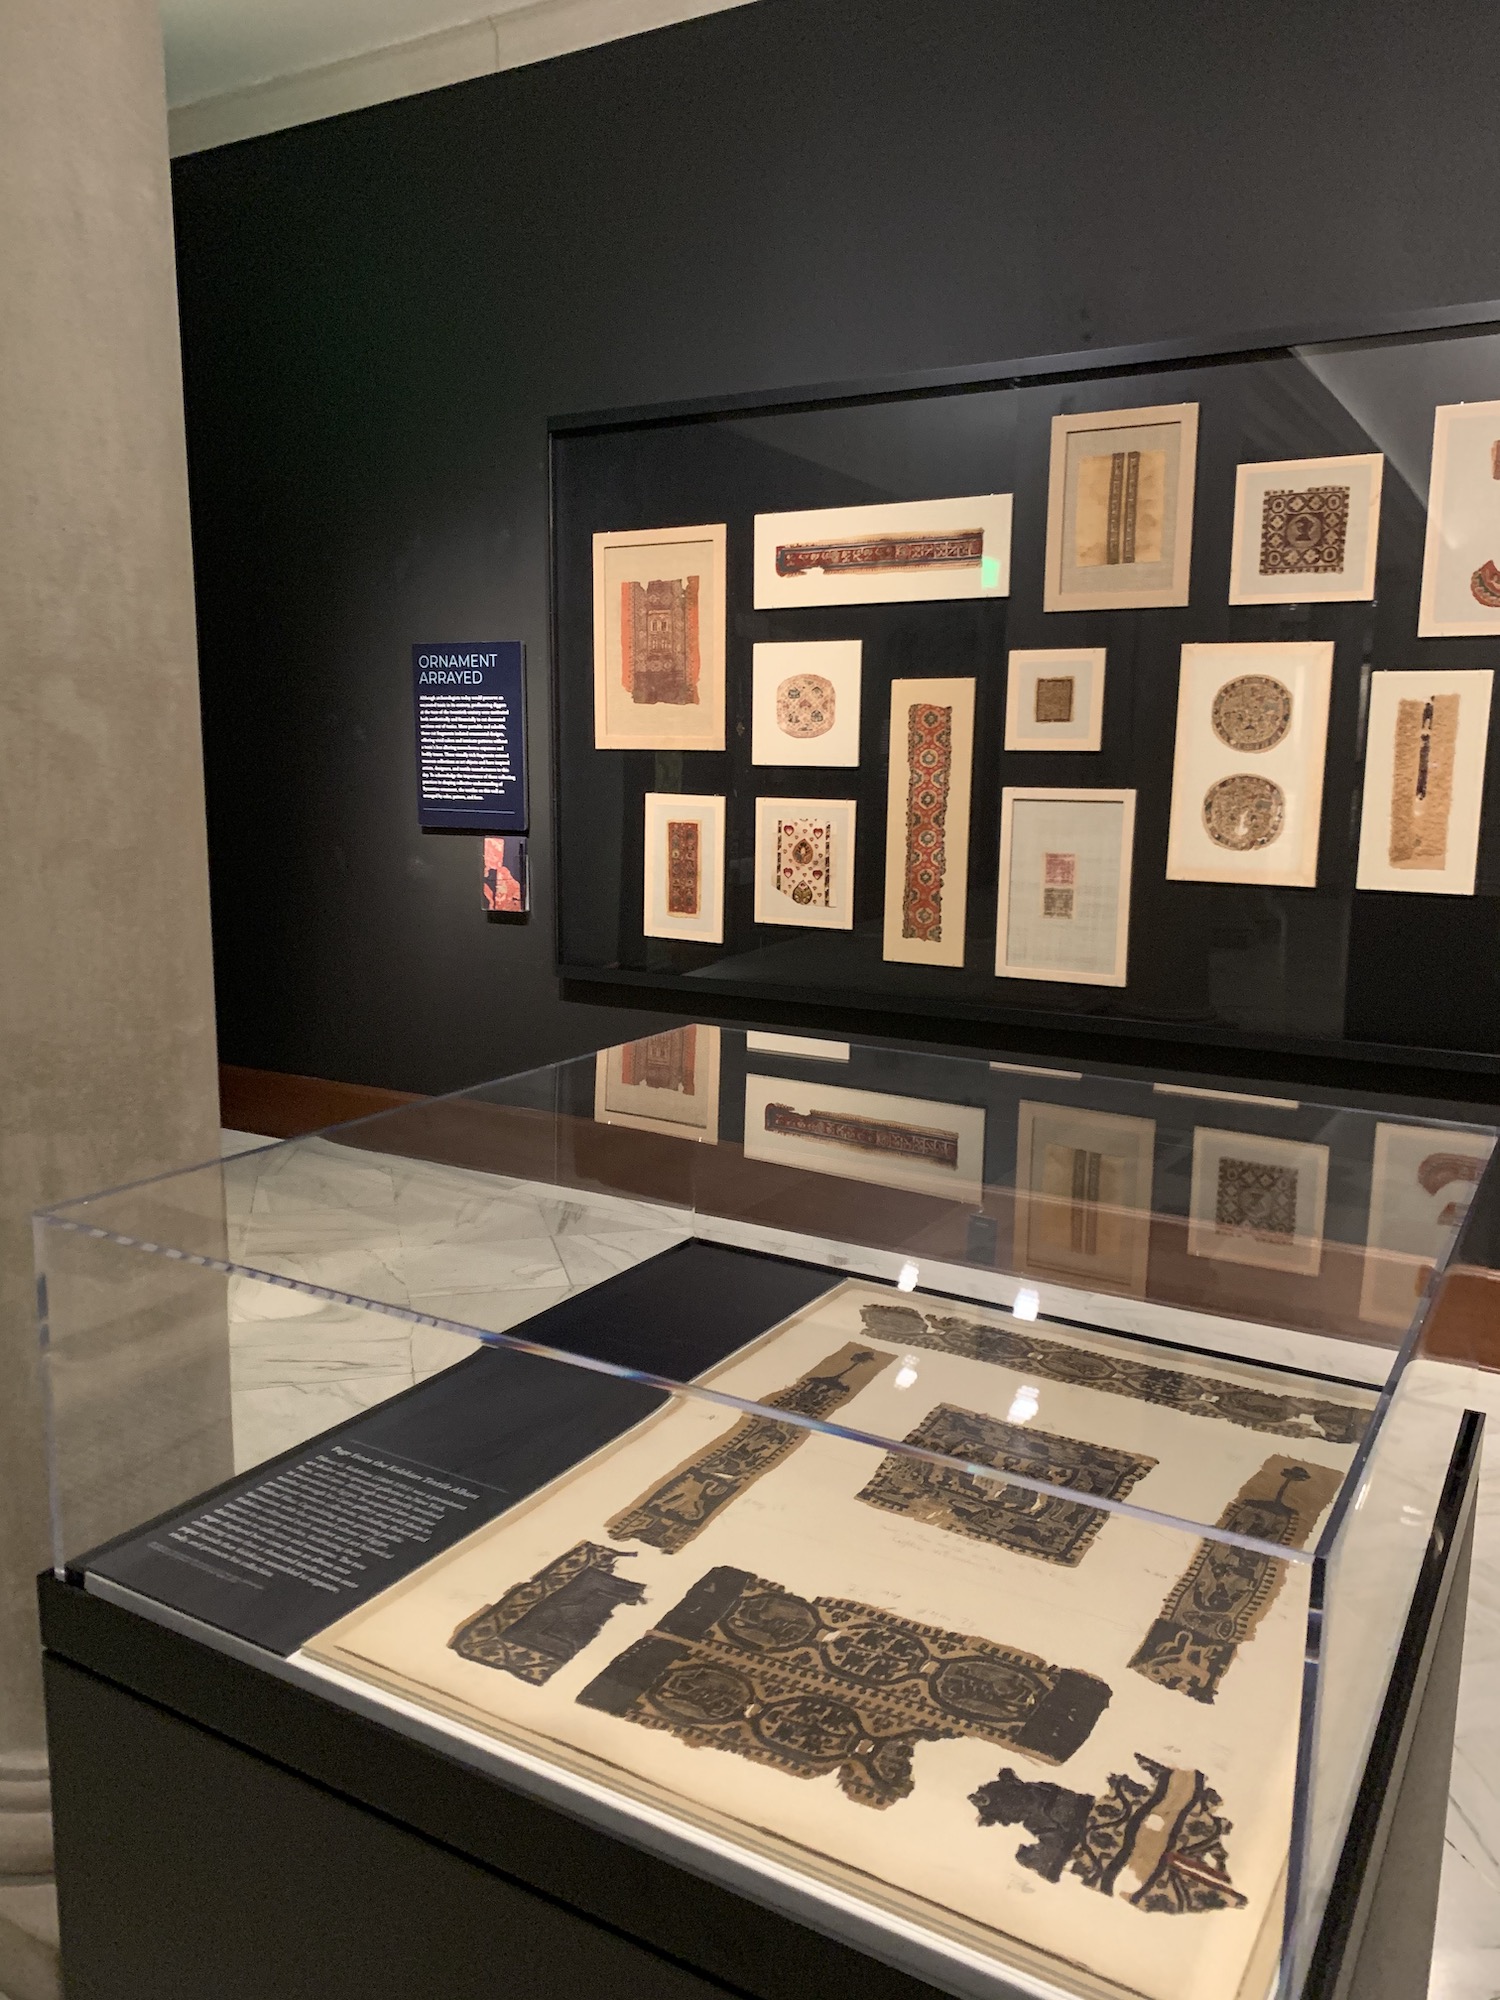 Wall of Textiles and Kelekian Album